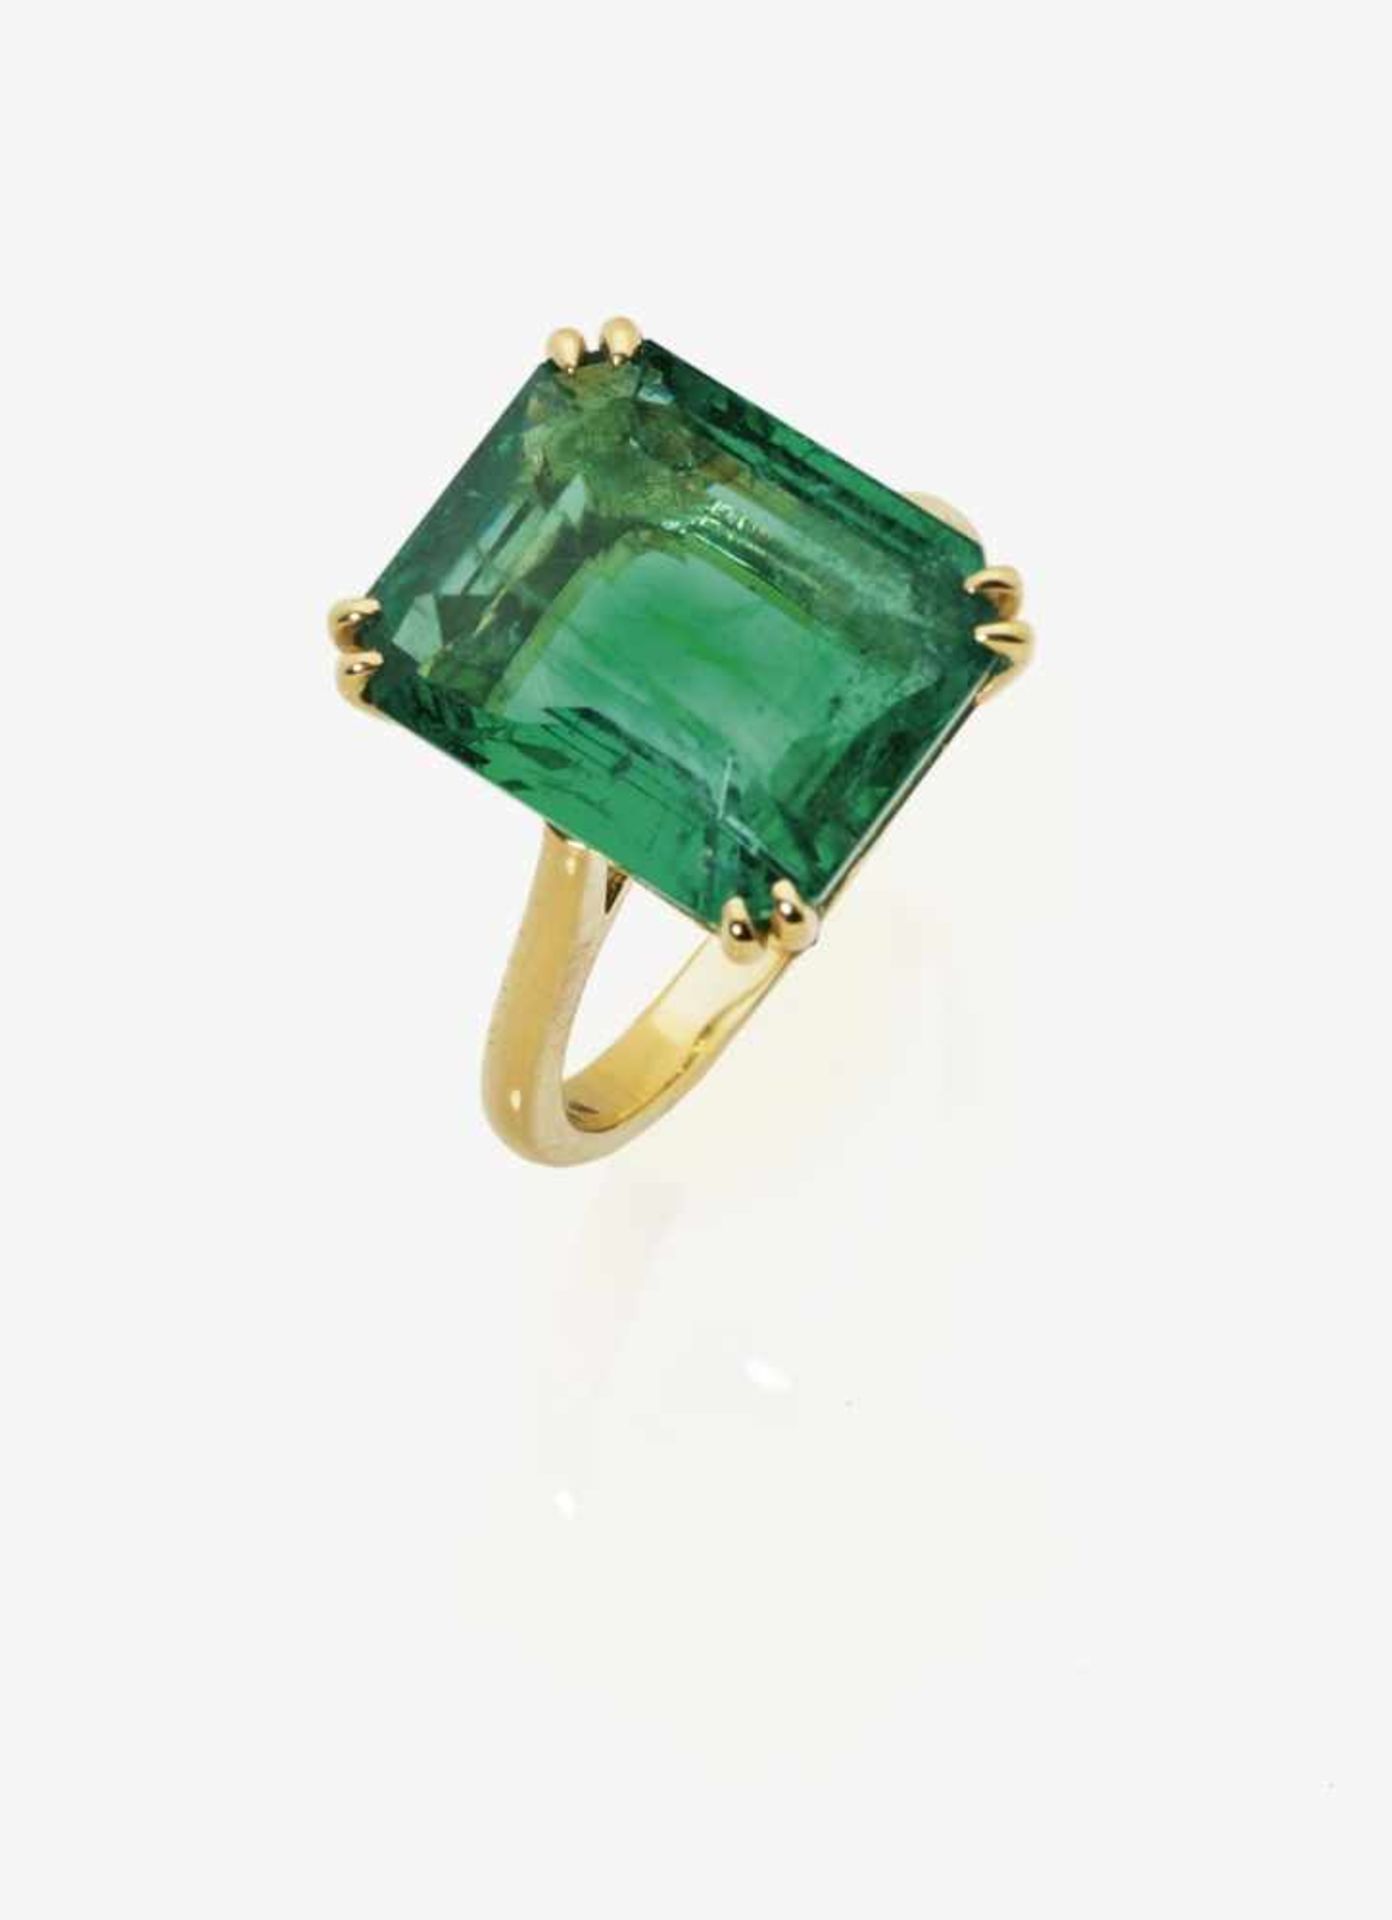 An Intense Green Emerald Solitaire RingFrance, Paris, 2000s, GALERIE DU DIAMANT 18K yellow gold (